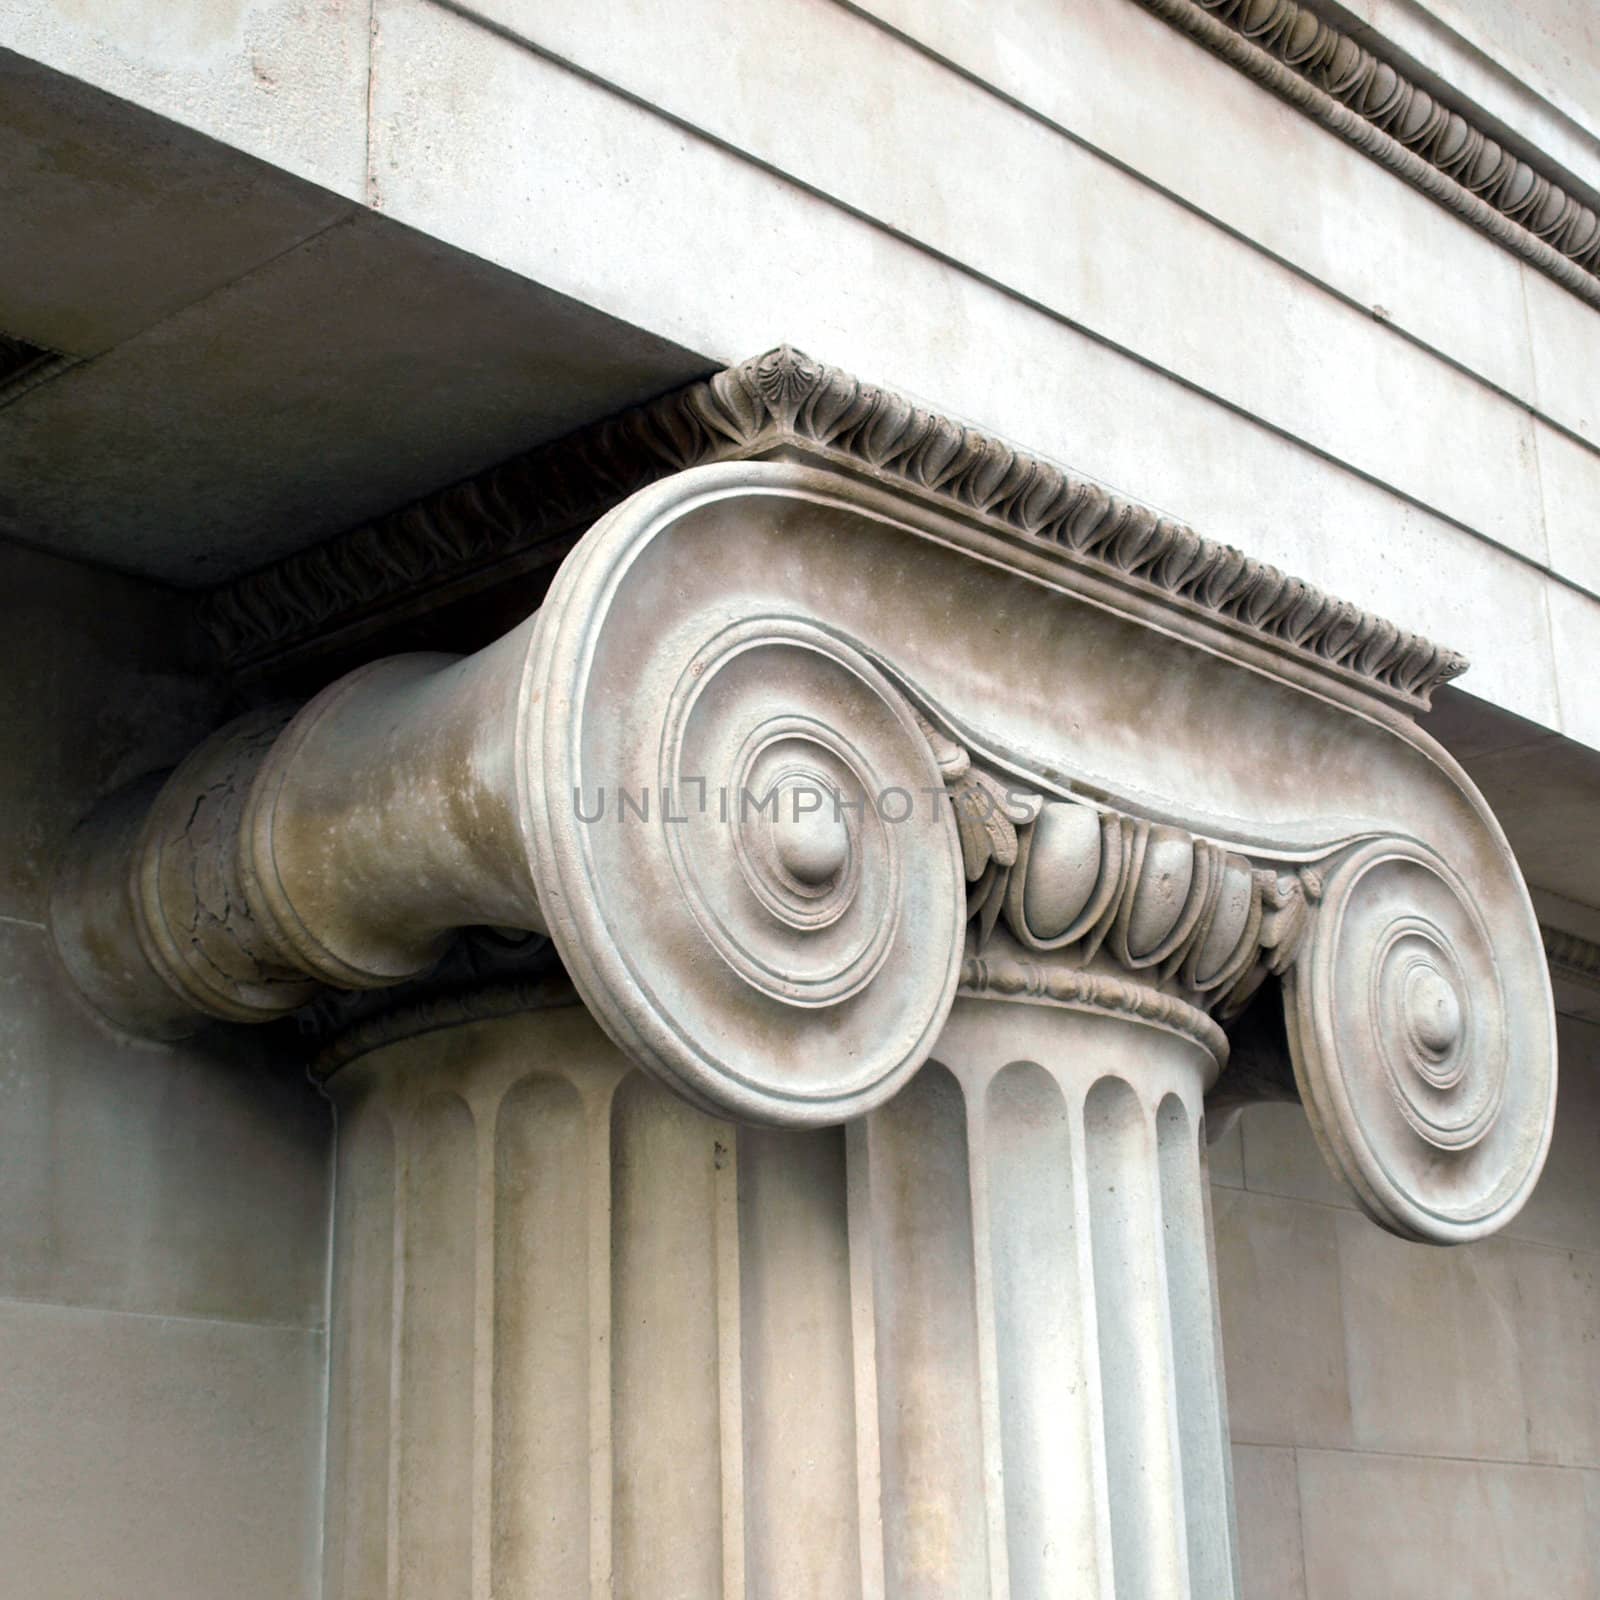 Detail of a Greek Ionic column capital